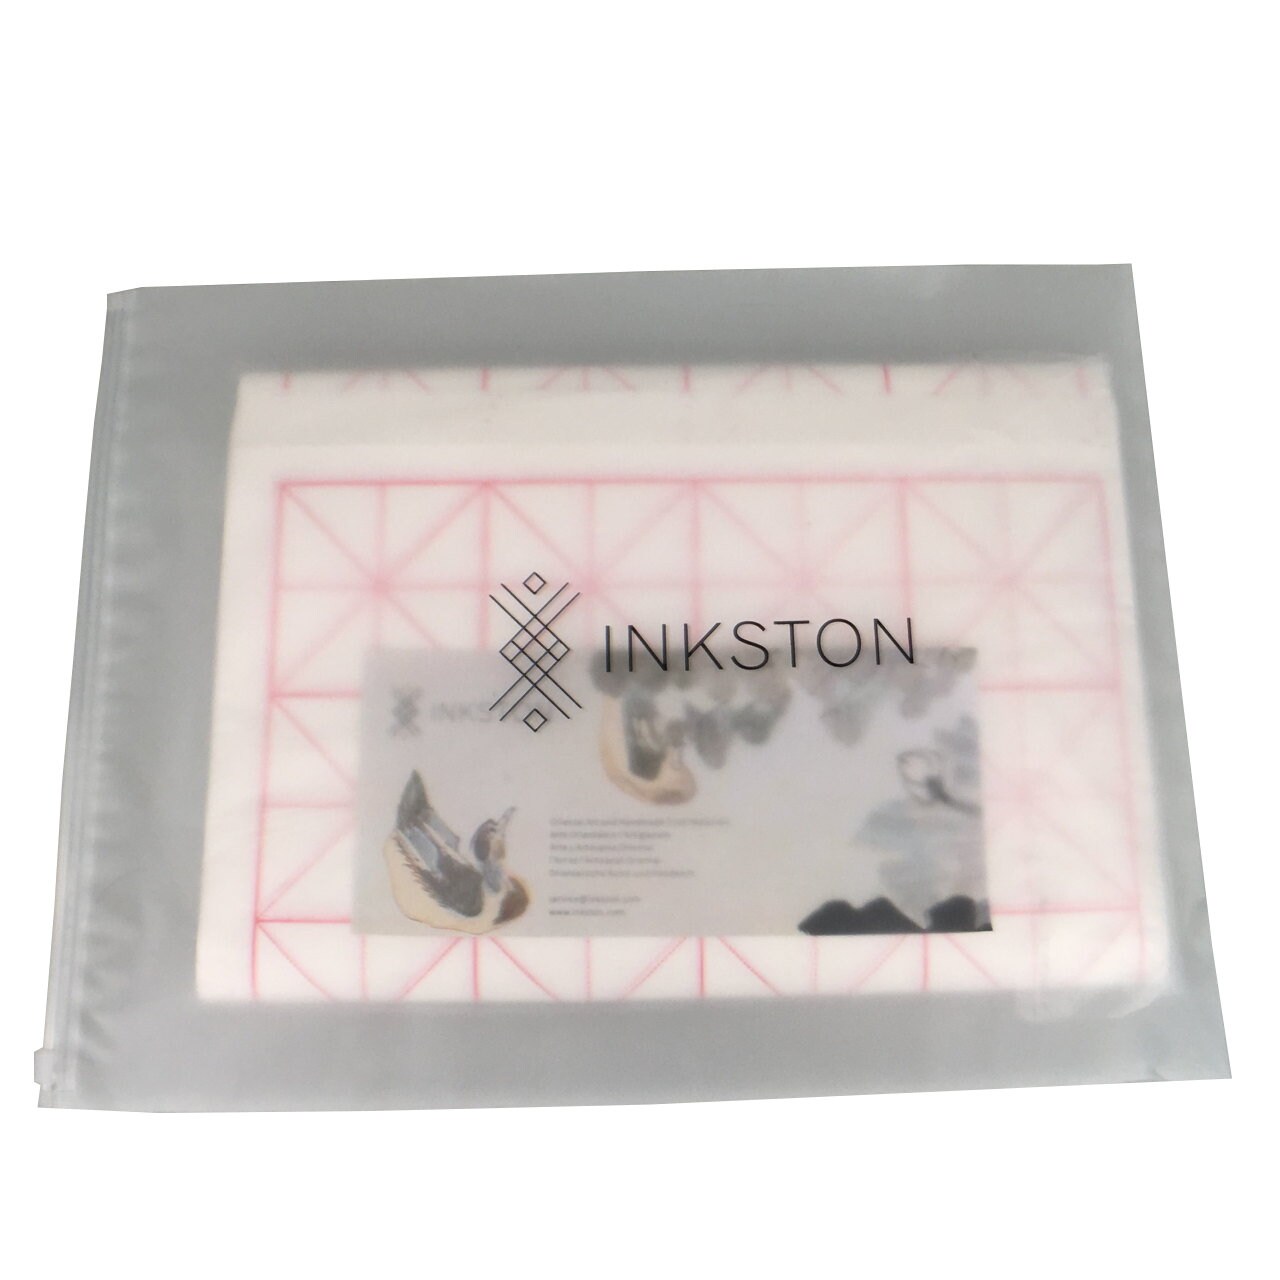 INKSTON Double Xuan Paper - de $65.37 en Inkston